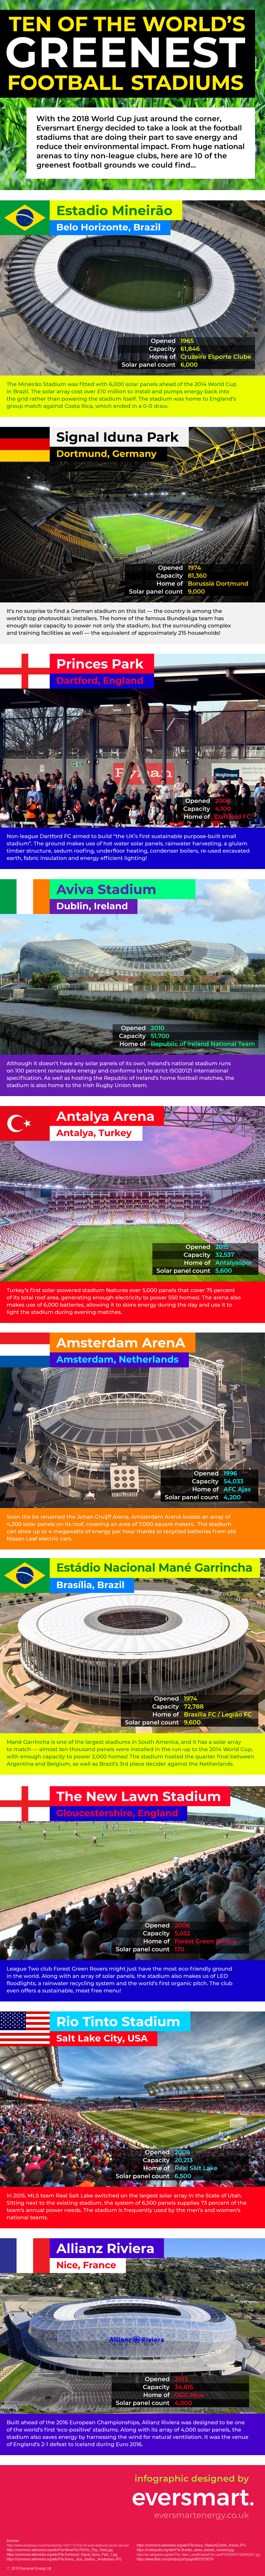 Green stadiums infographic